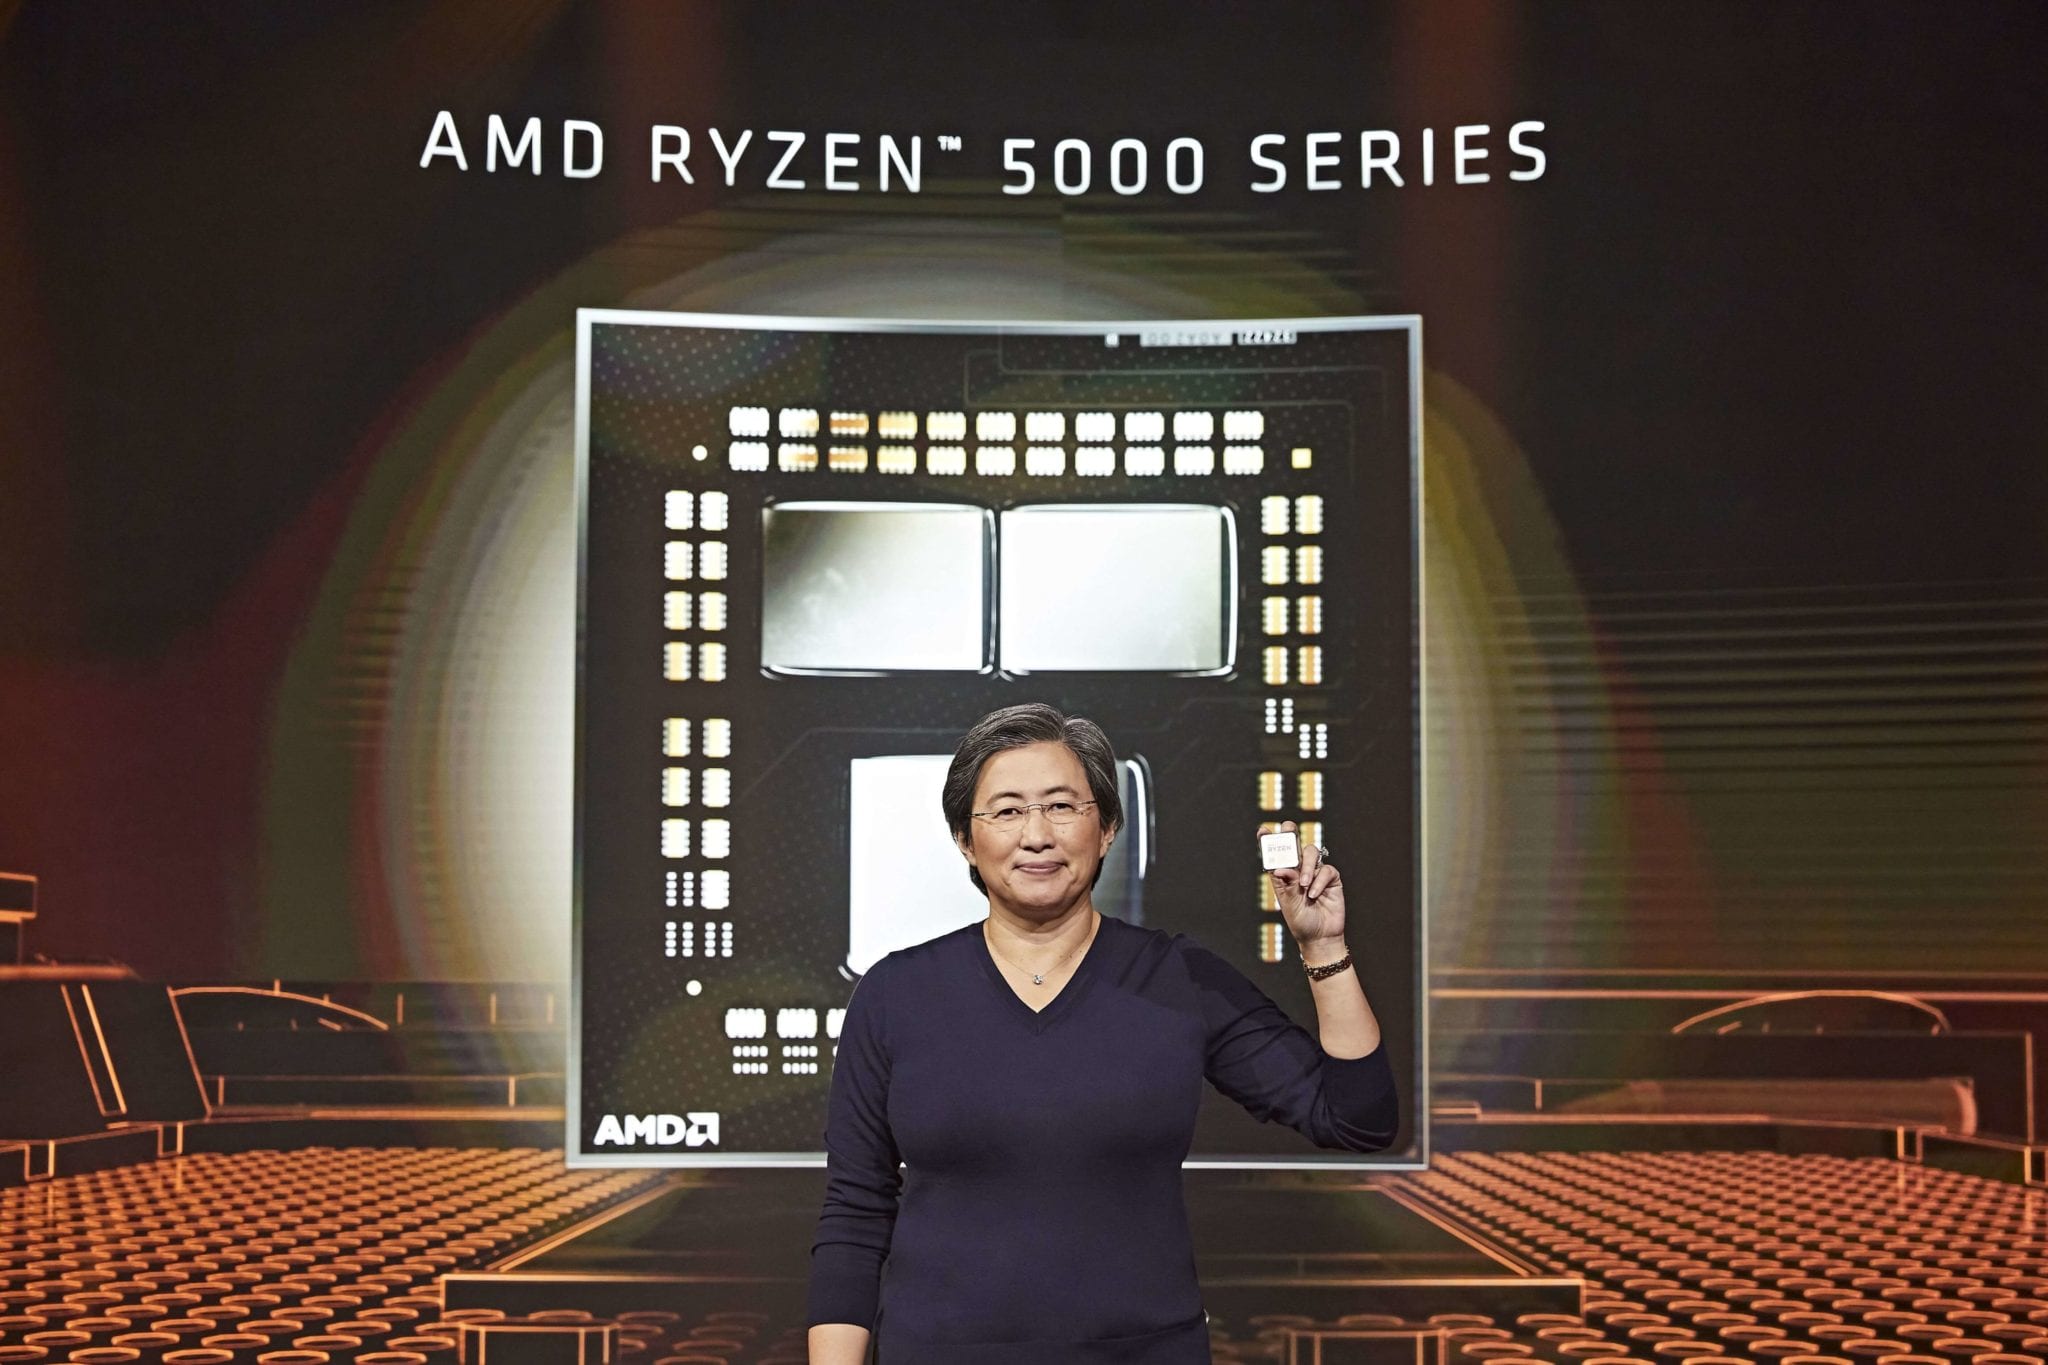 Dr Lisa Su with Ryzen 5000 CPU